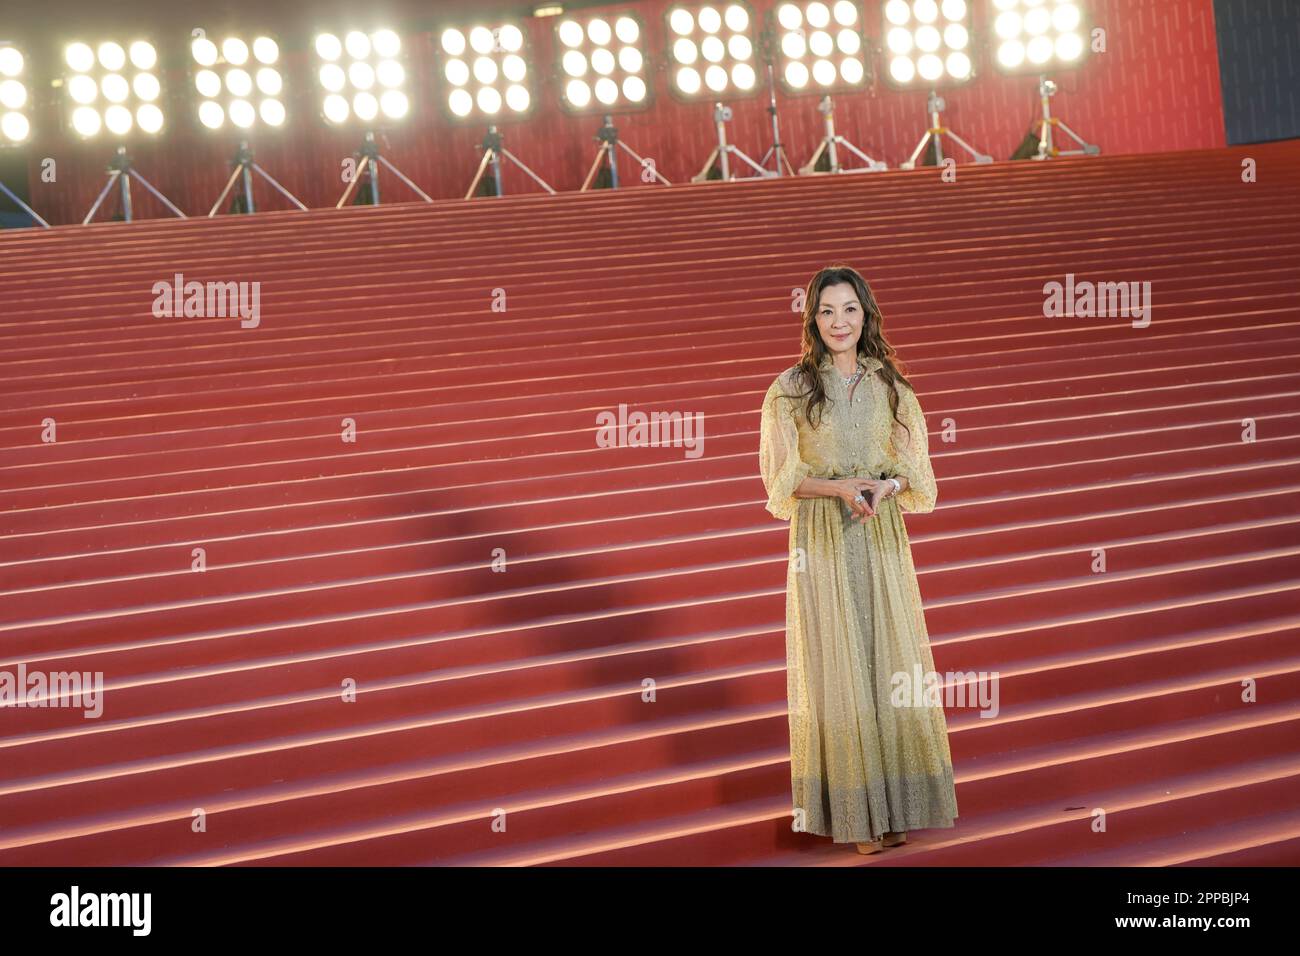 Oscar winner Michelle Yeoh Choo-Kheng poses for a photo at the red carpet of The 41st Hong Kong Film Awards ceremony at Hong Kong Cultural Centre in Tsim Sha Tsui.   16APR23   SCMP / Sam Tsang Stock Photo